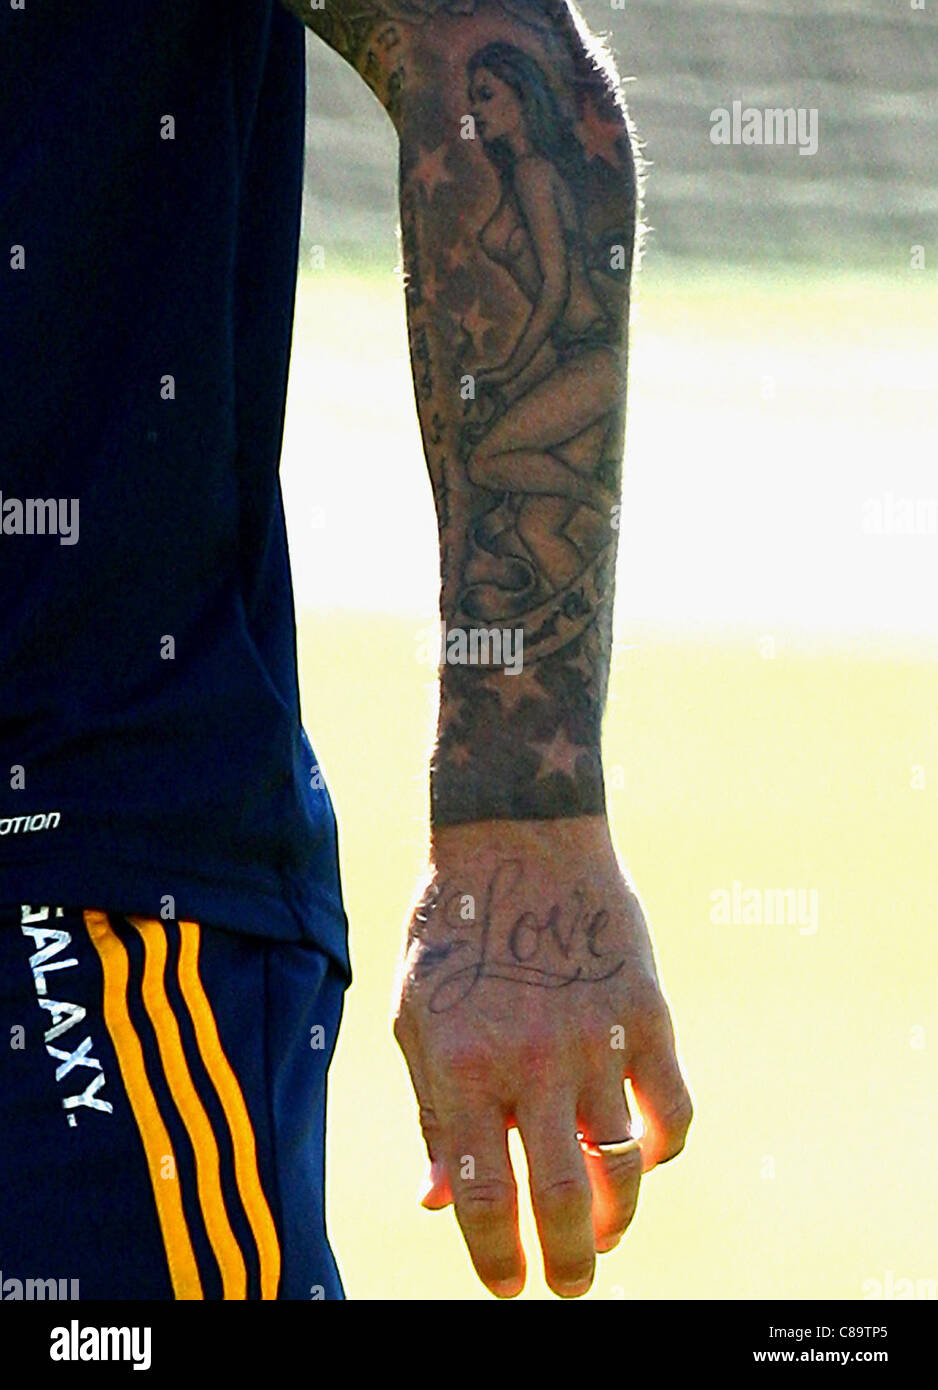 Victoria Beckham Seemingly Removed David Beckham Tattoo Amid Marriage  Crisis Rumors | IBTimes